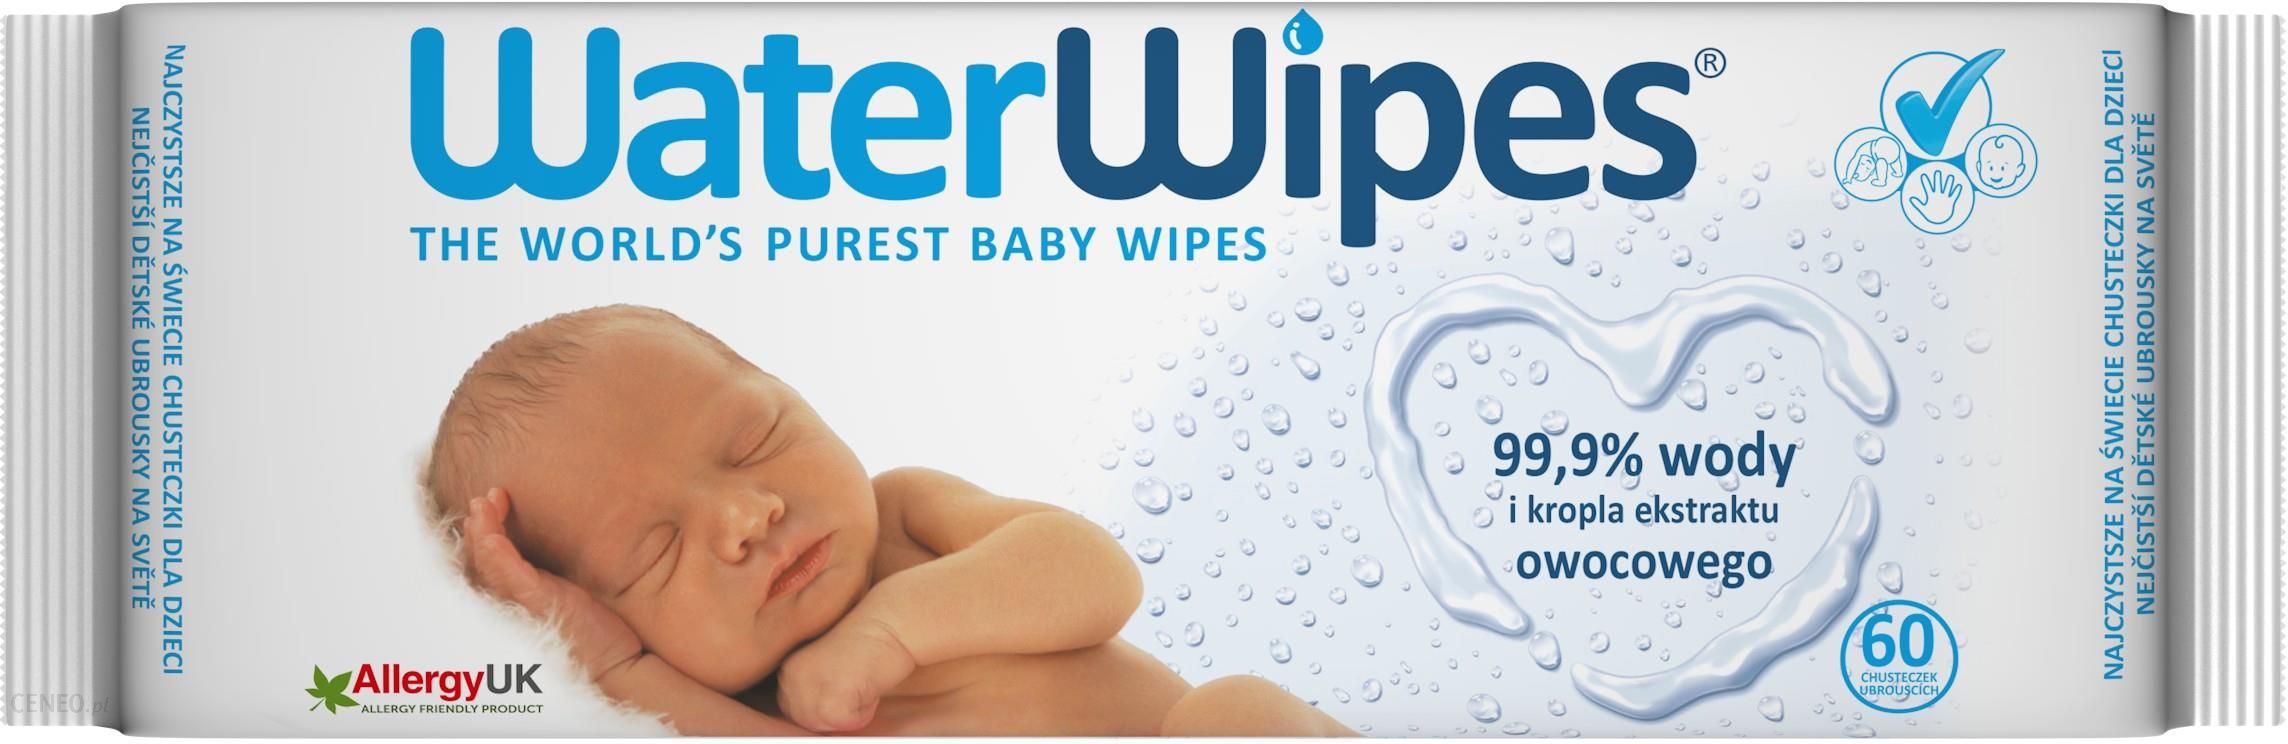 WaterWipes Plastic-Free Original Baby Wipes 4pk